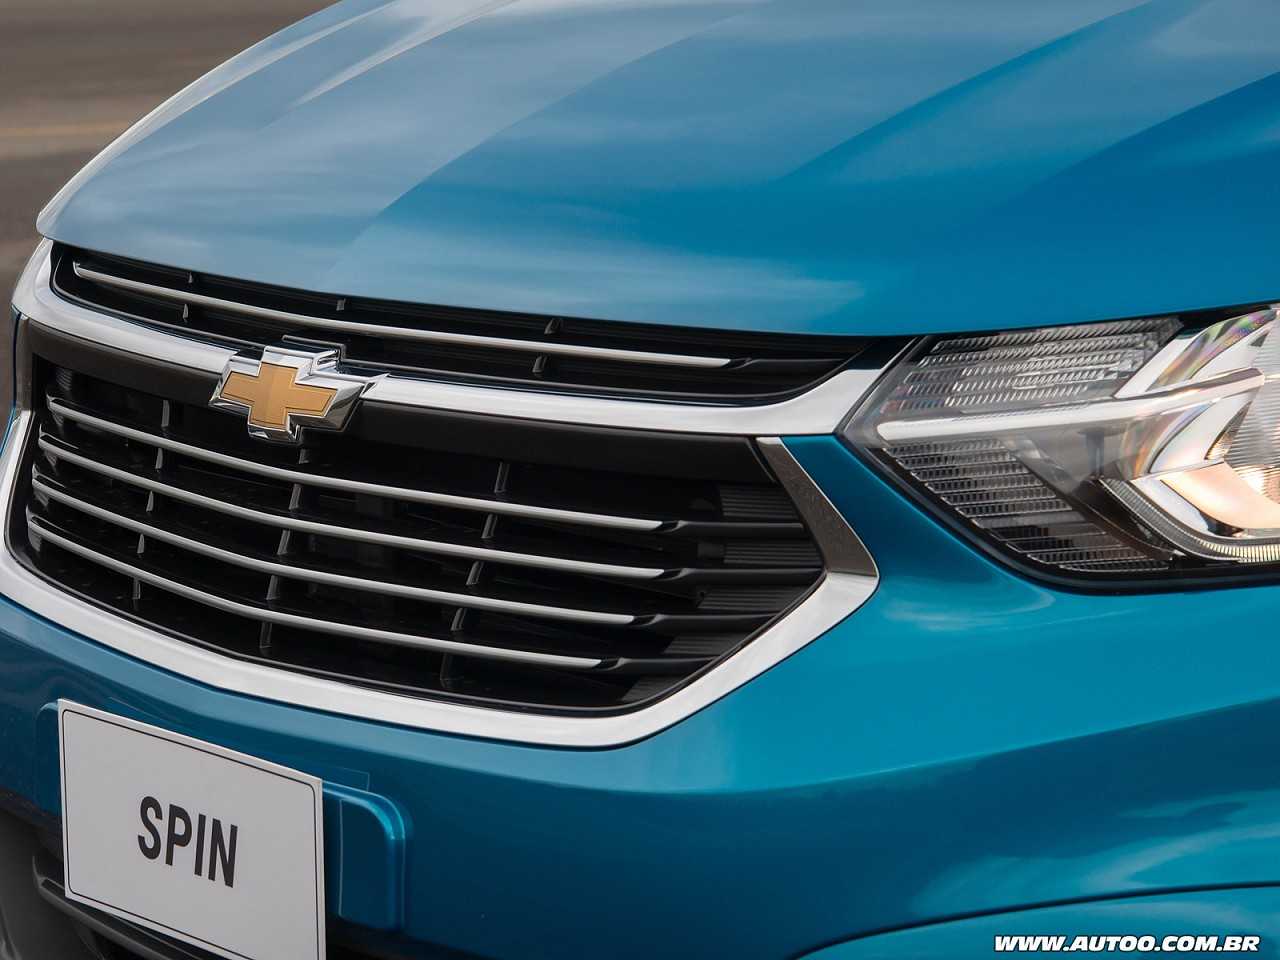 ChevroletSpin 2019 - grade frontal